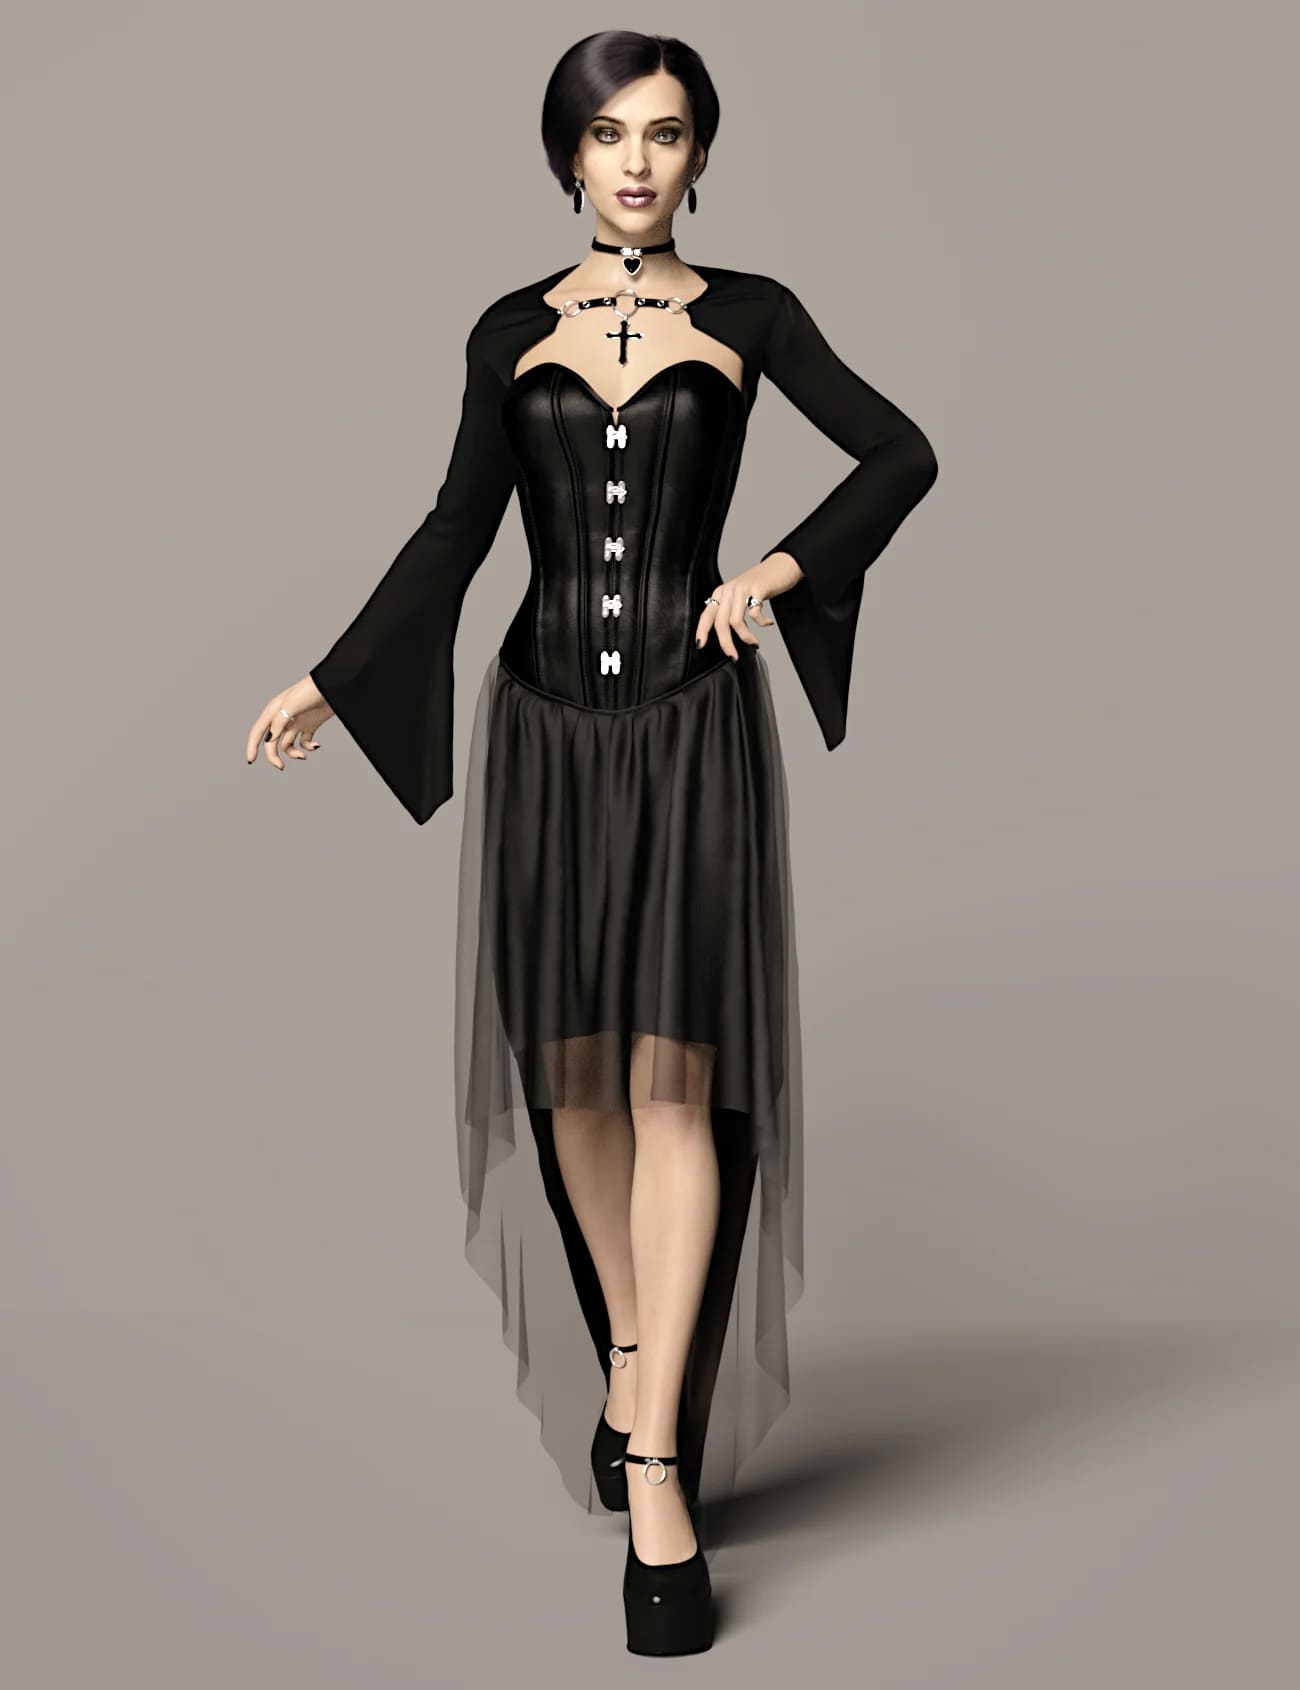 dForce Dark Vamp Outfit for Genesis 8 and 8.1 Females_DAZ3DDL